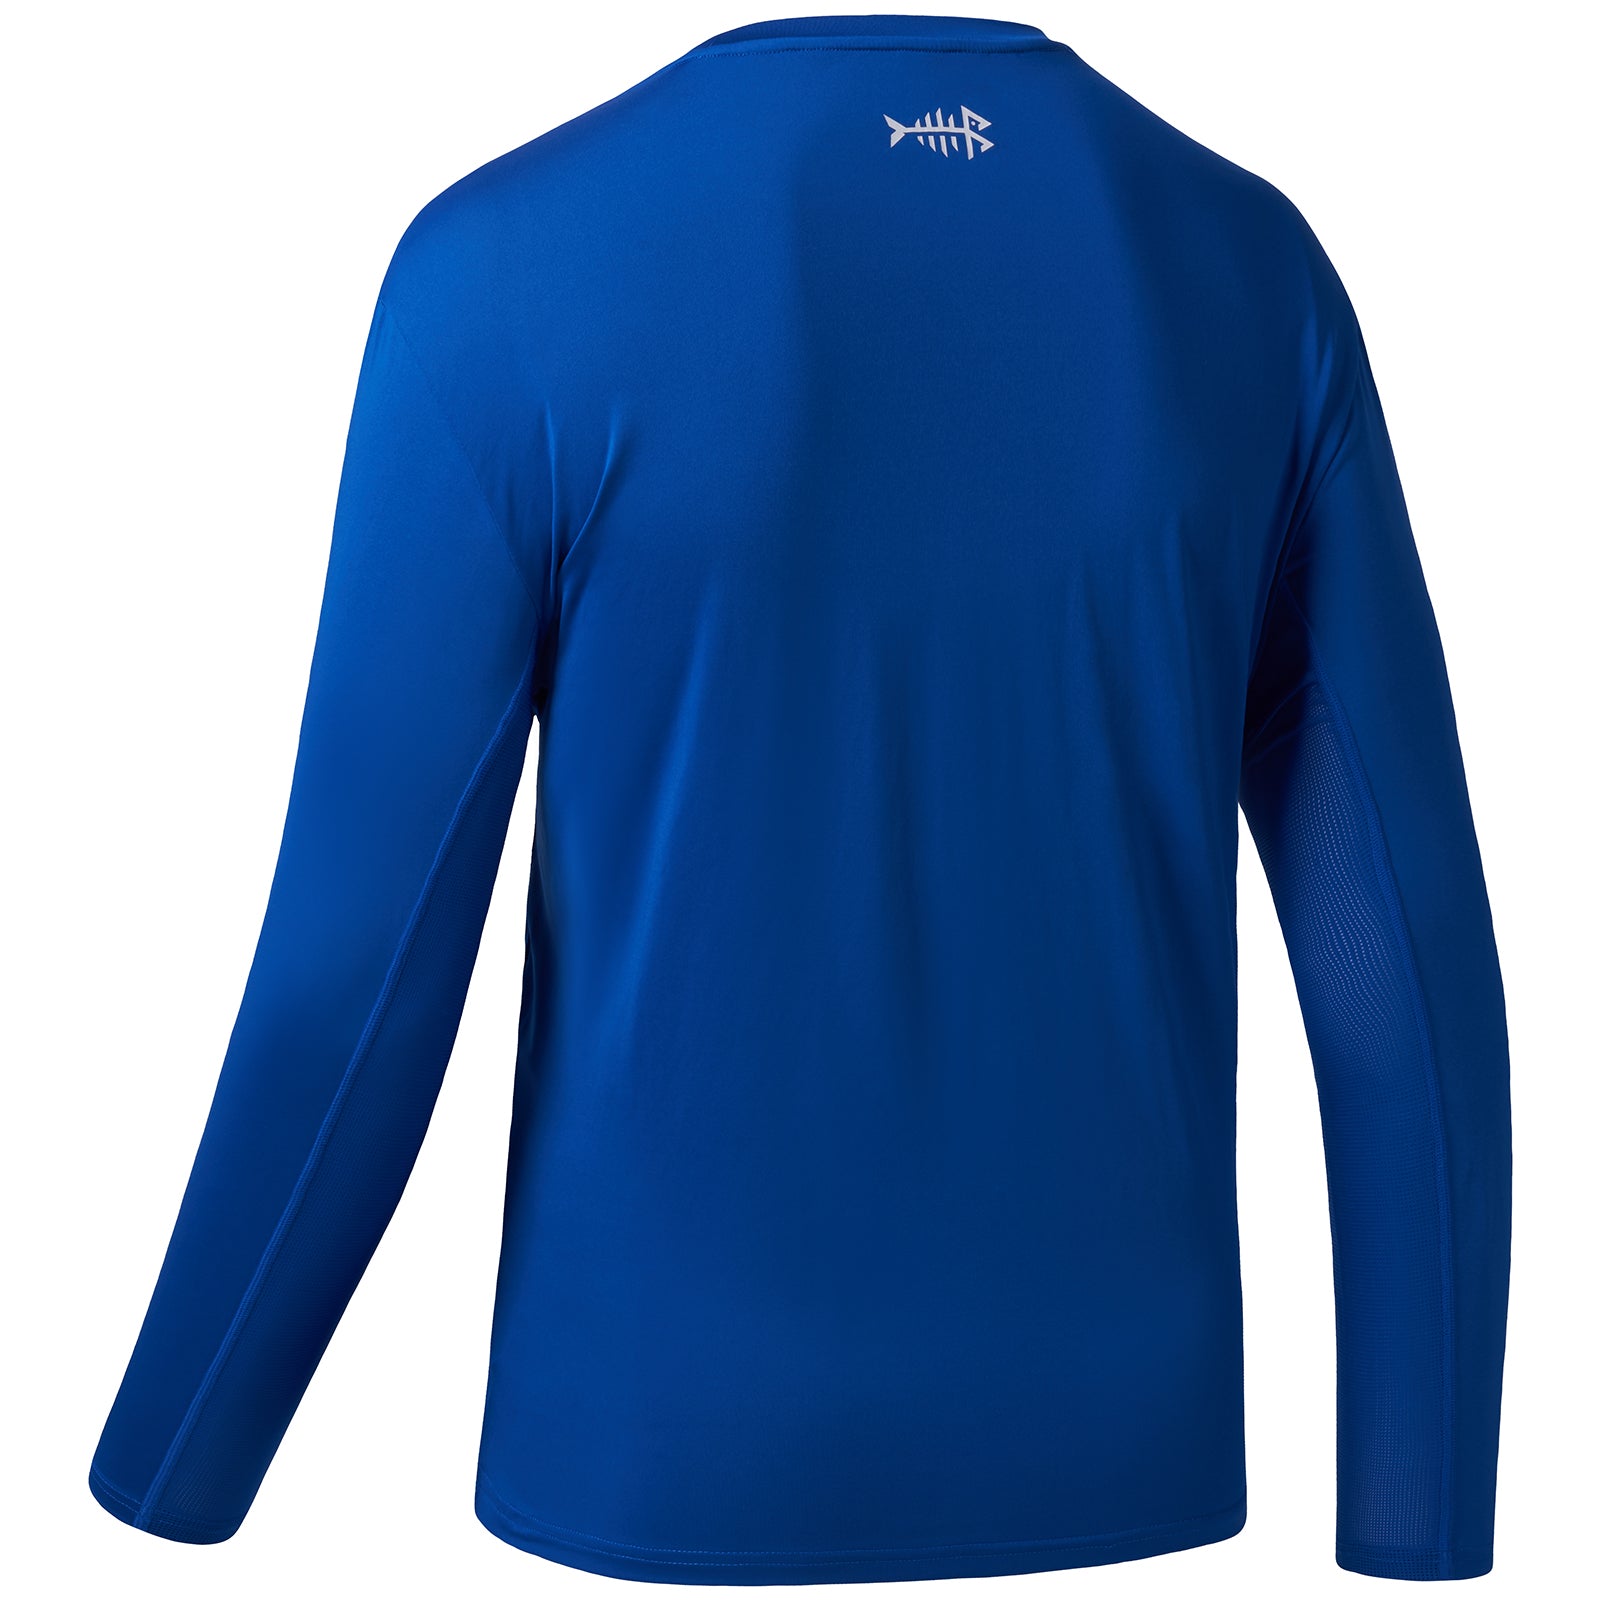 HODOSPORTS UPF 50+ Fishing Shirts for Men Long Sleeve UV Protection Sun  Shirts